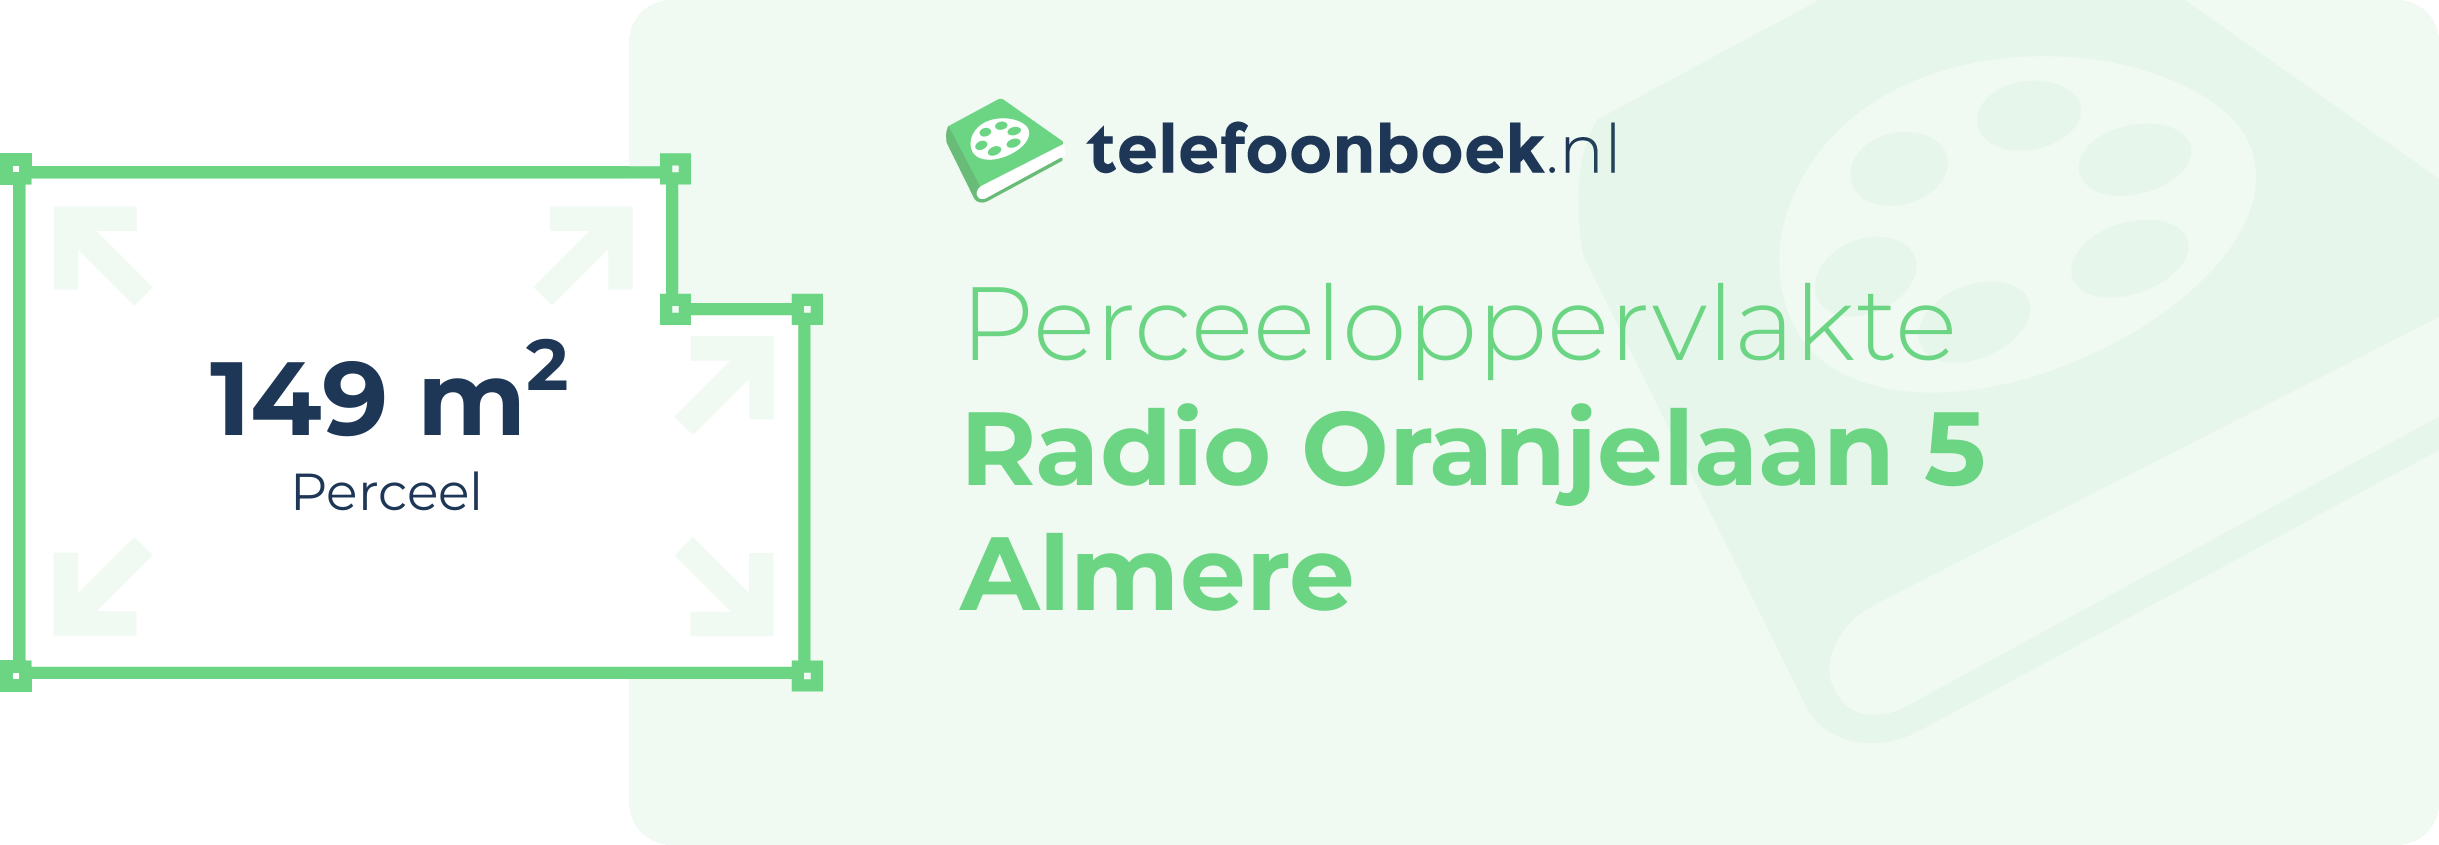 Perceeloppervlakte Radio Oranjelaan 5 Almere